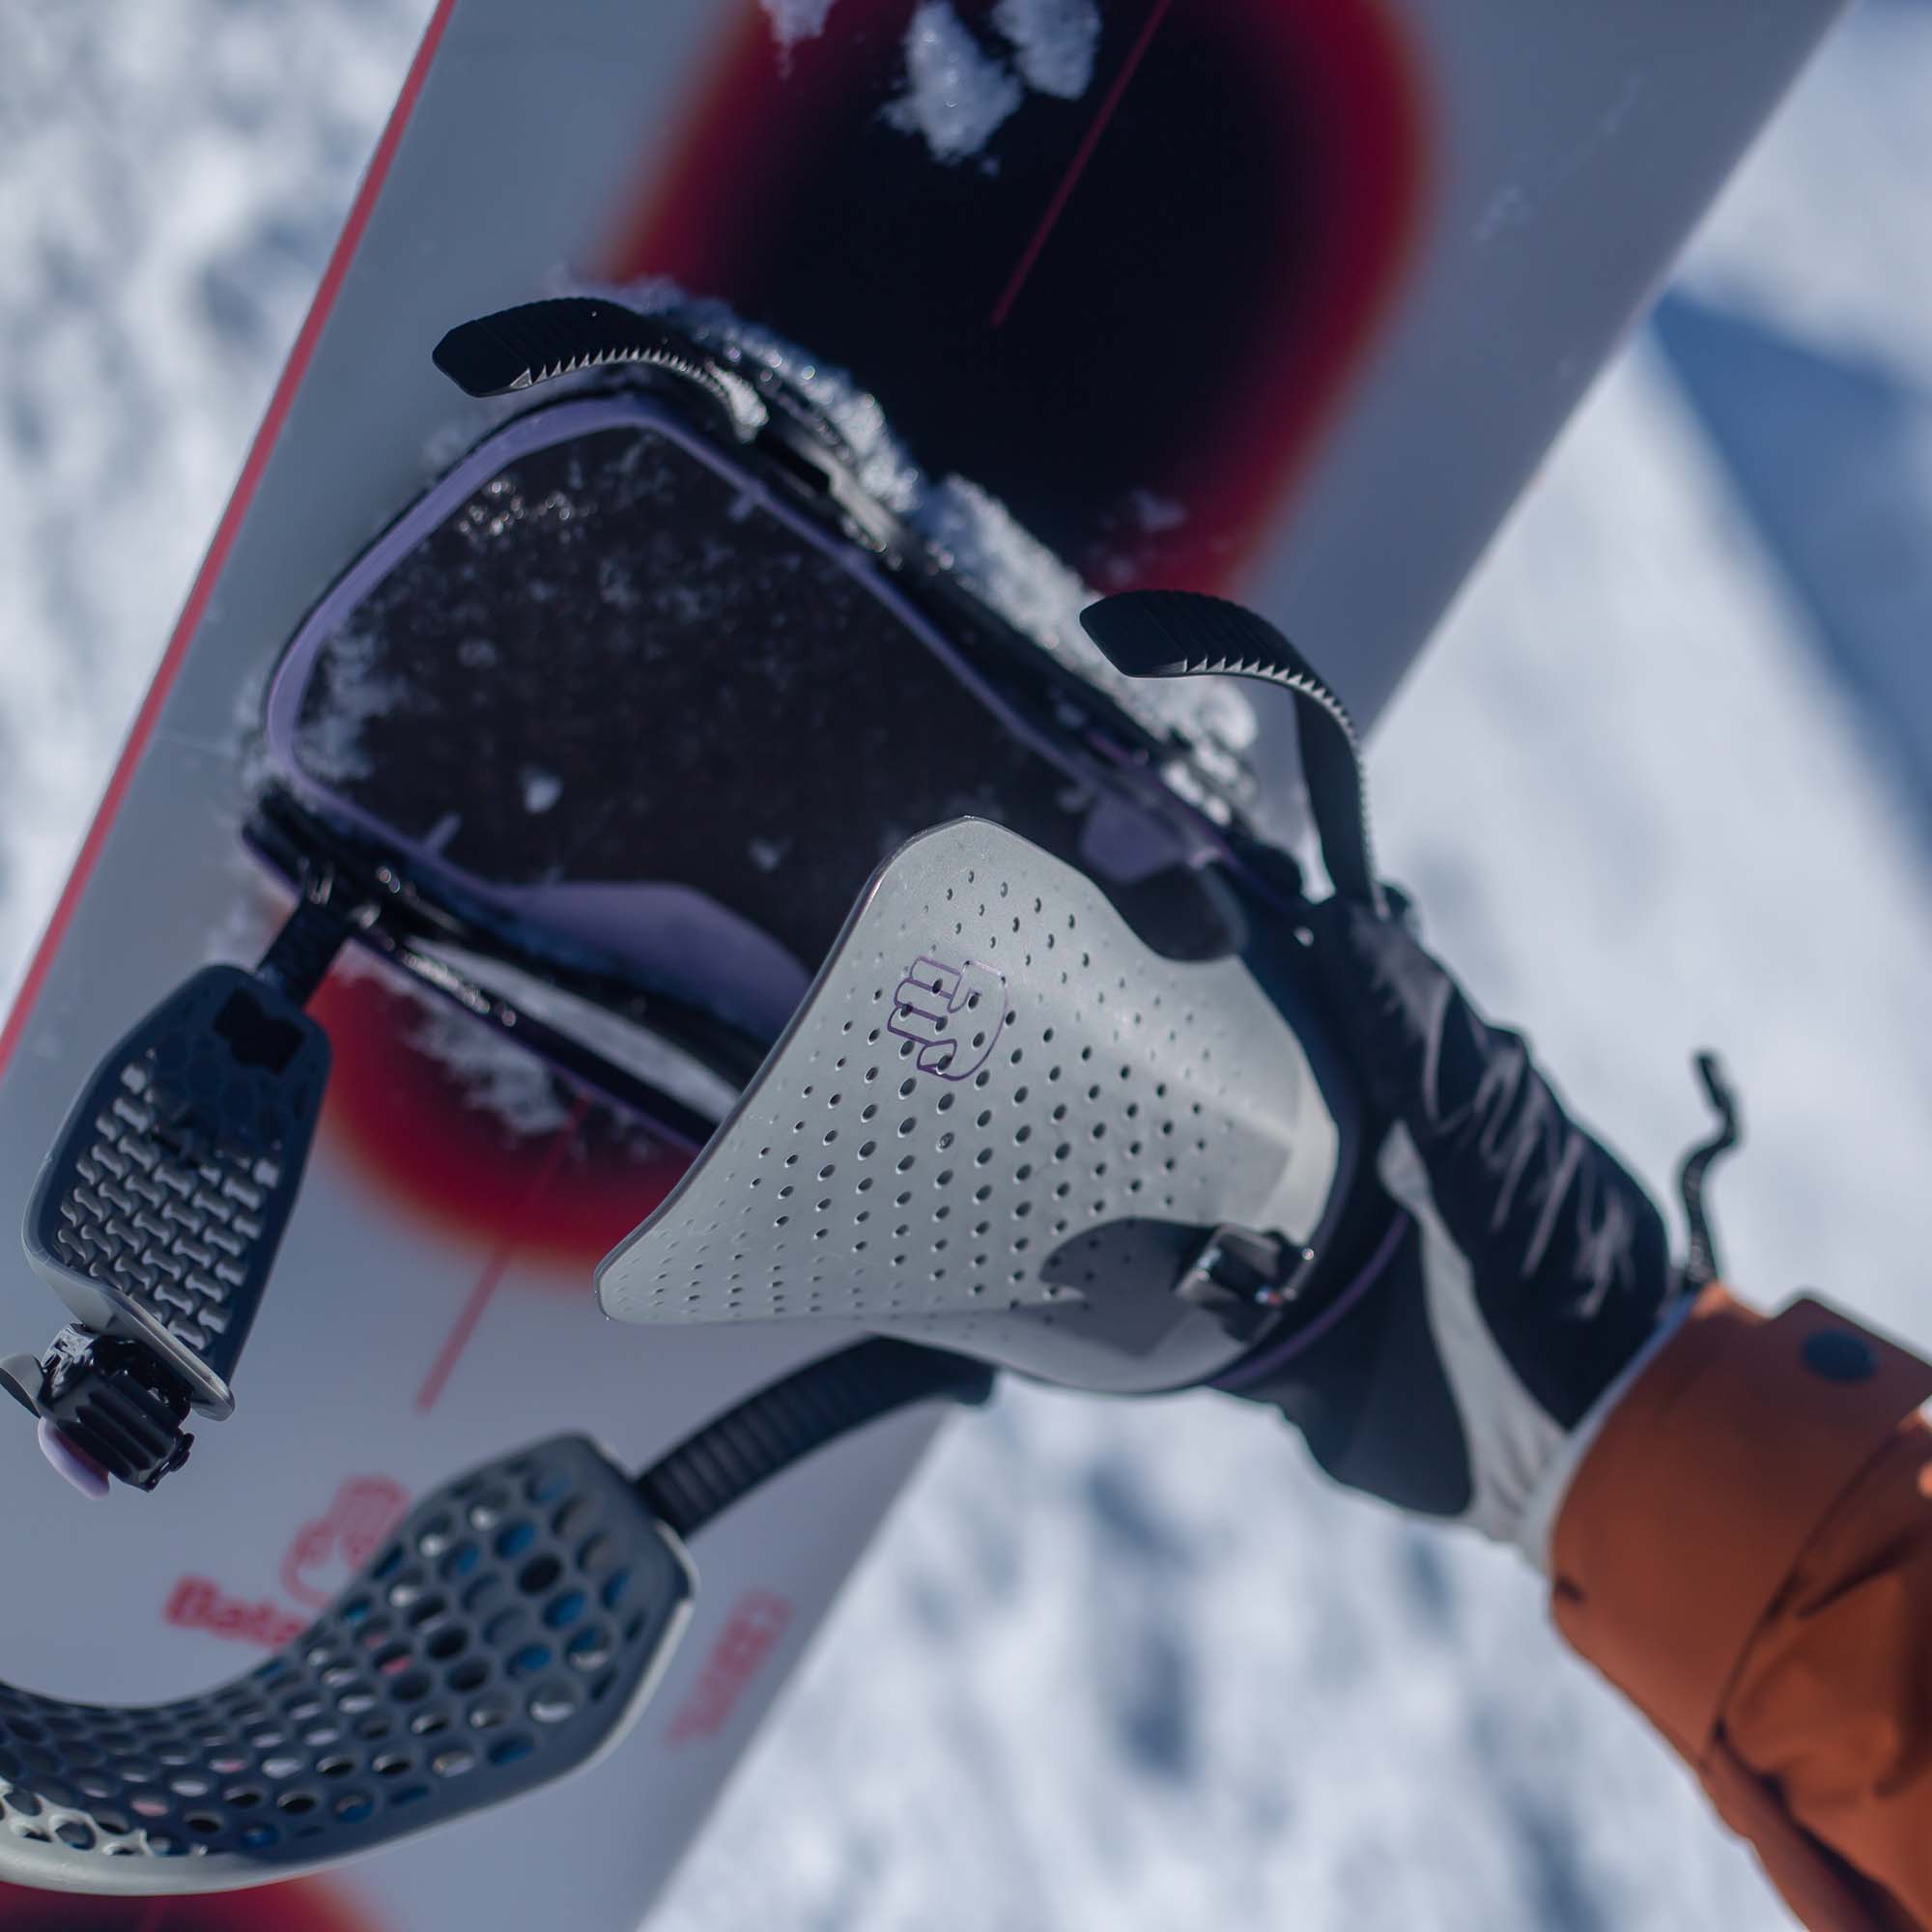 Bataleon Astro Asym Snowboard Bindings